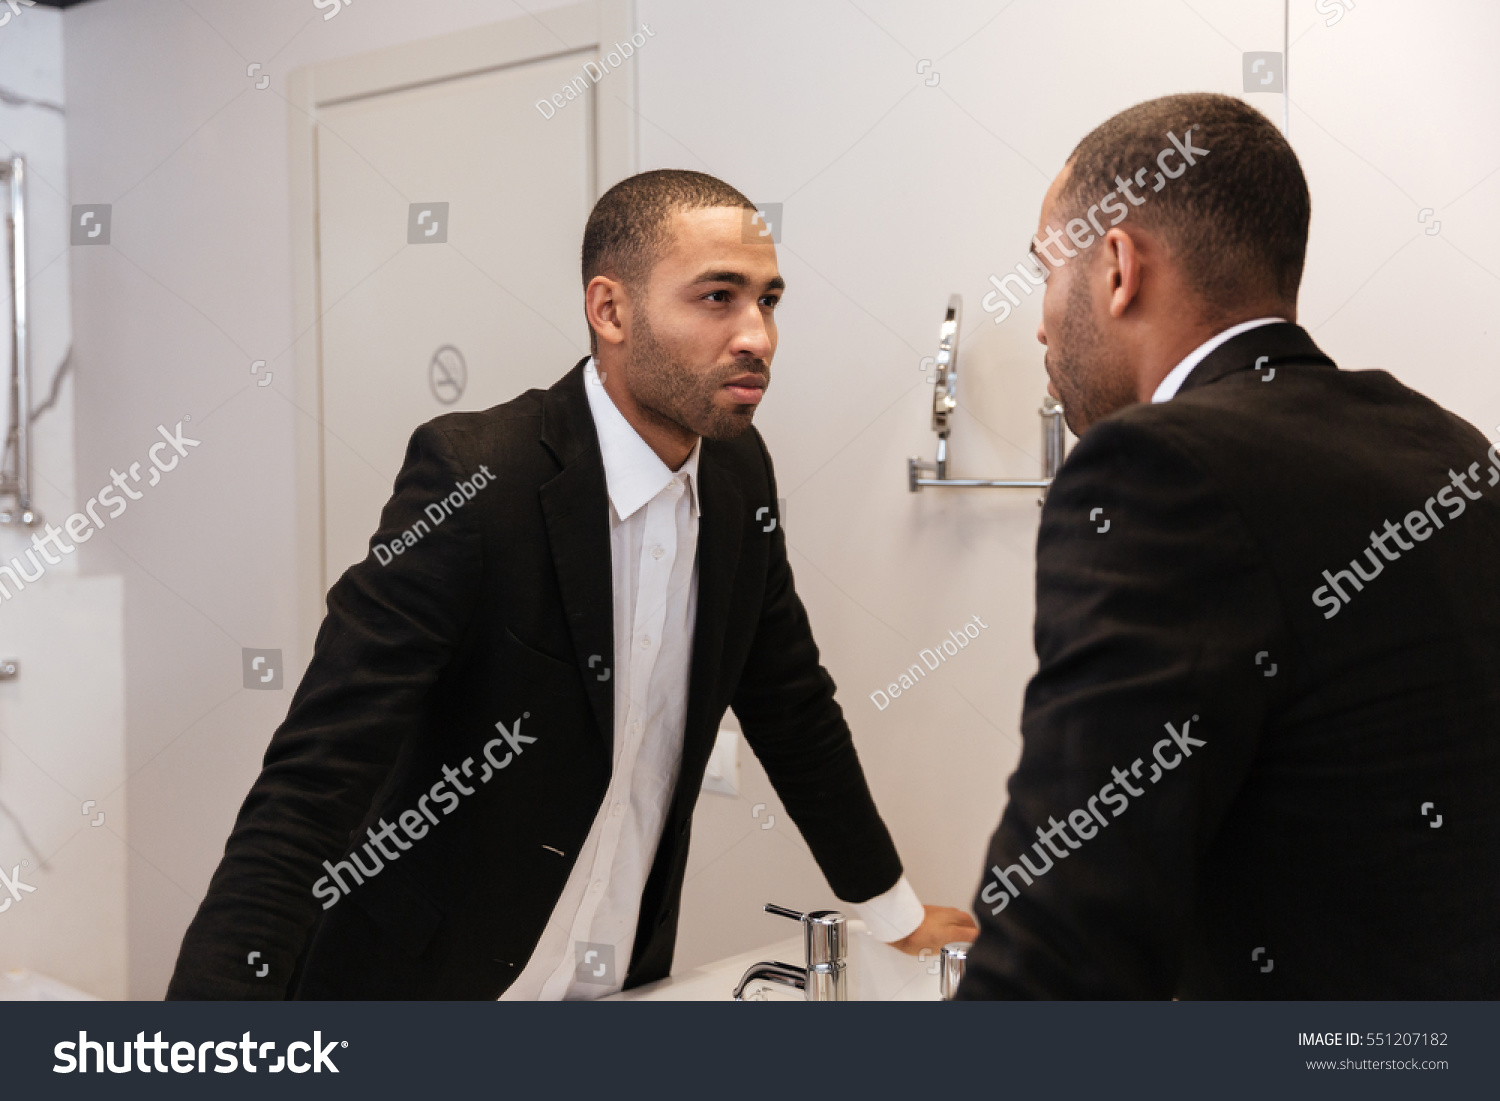 Back view of African man in suit looking at mirror in bathroom in hotel room #551207182